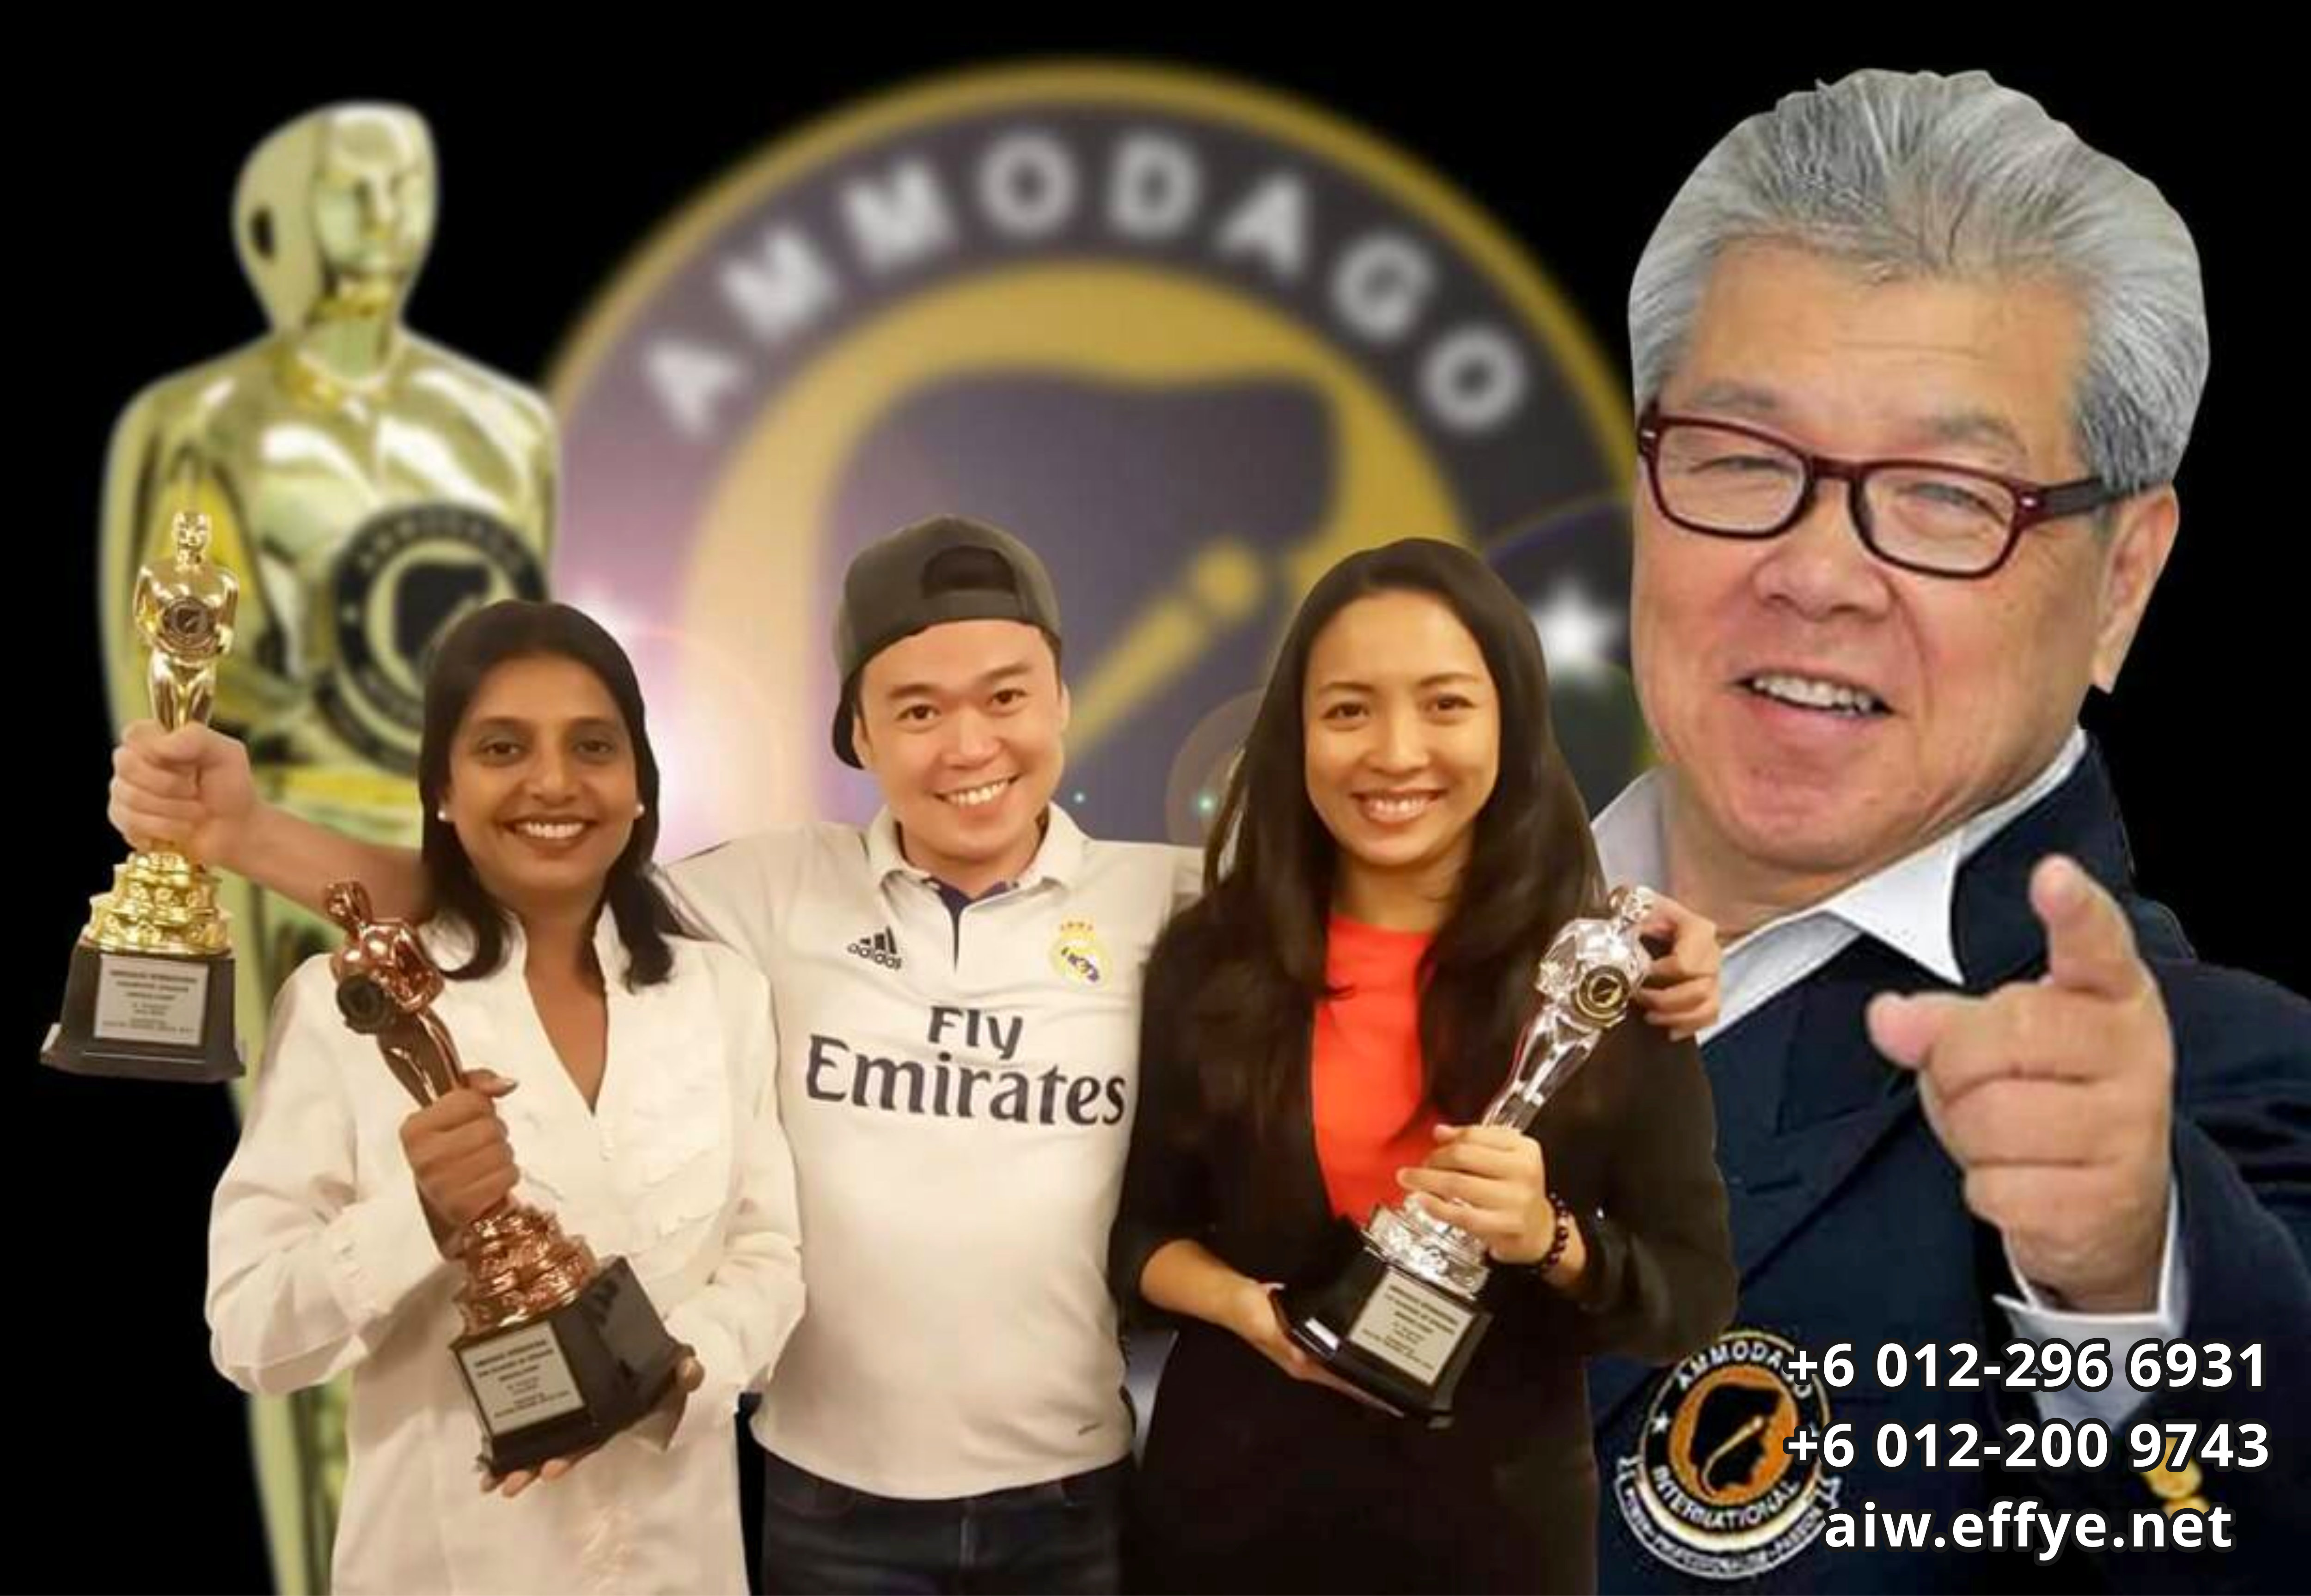 Ammodago International 工作坊 2018 David Goh 发展你成为世界级的演讲者 让你体验你内在的力量 马来西亚 雪兰莪 吉隆坡 培训 训练 课程 2018 EPA04